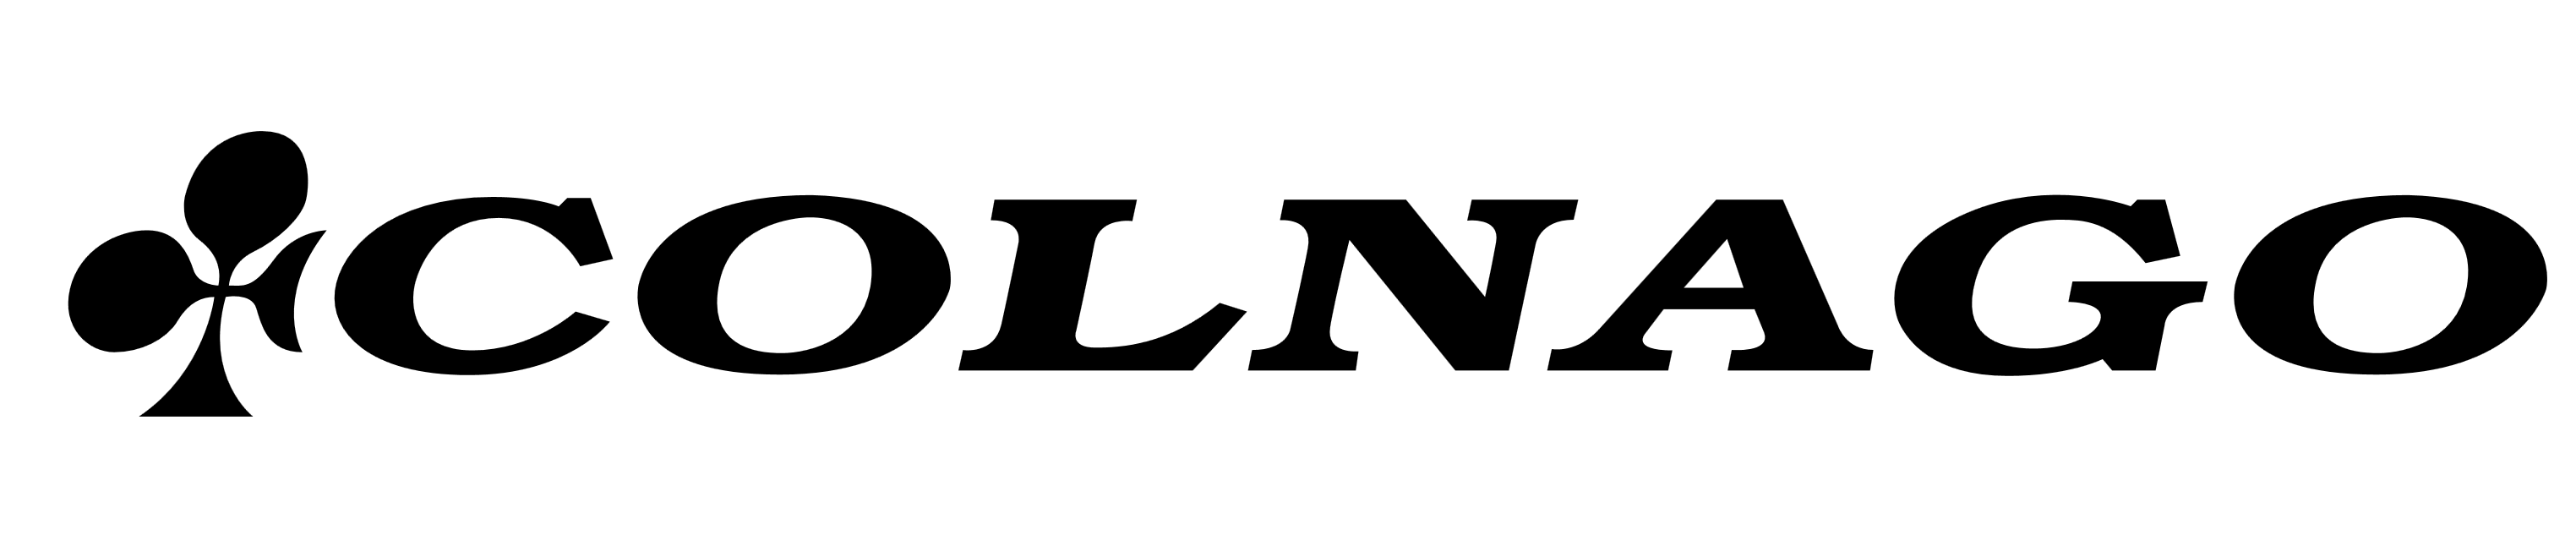 Colnago logo, logotype